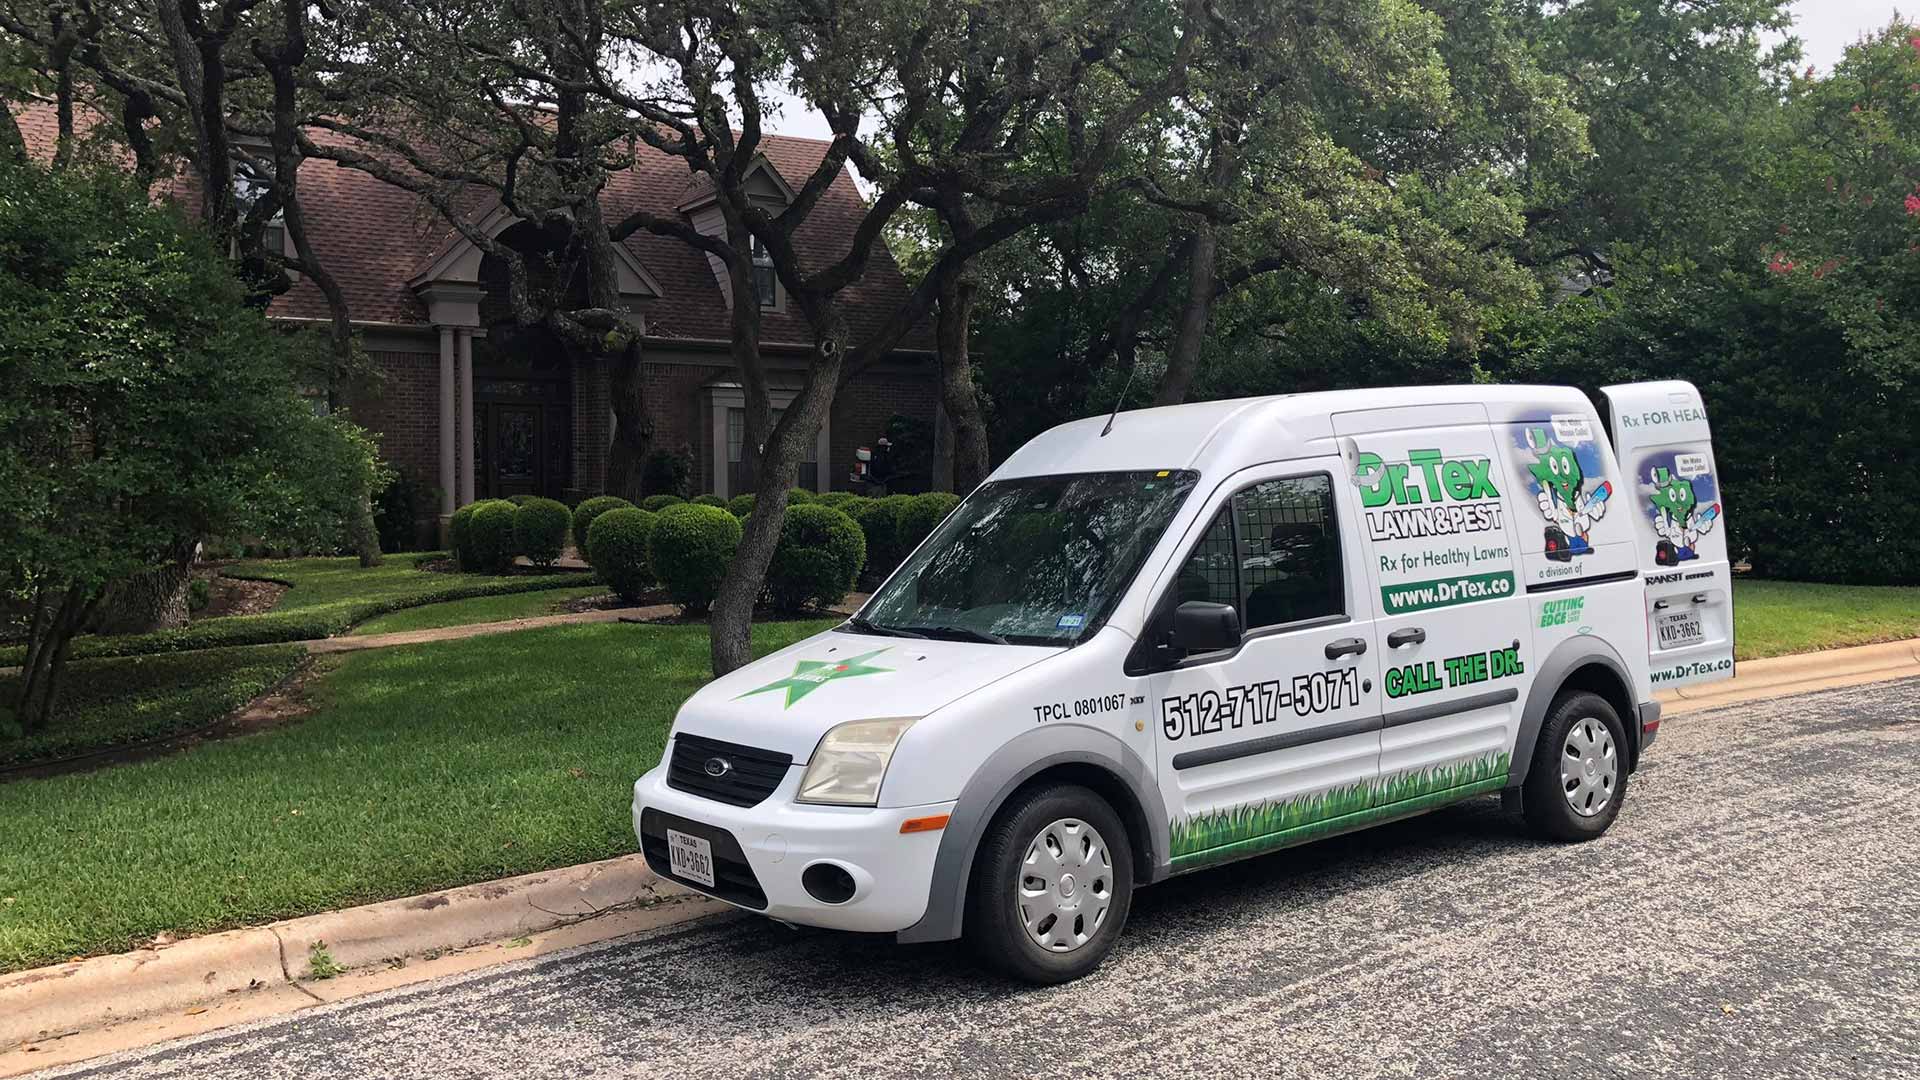 Dr. Tex van displayed in front of home in Austin, TX.